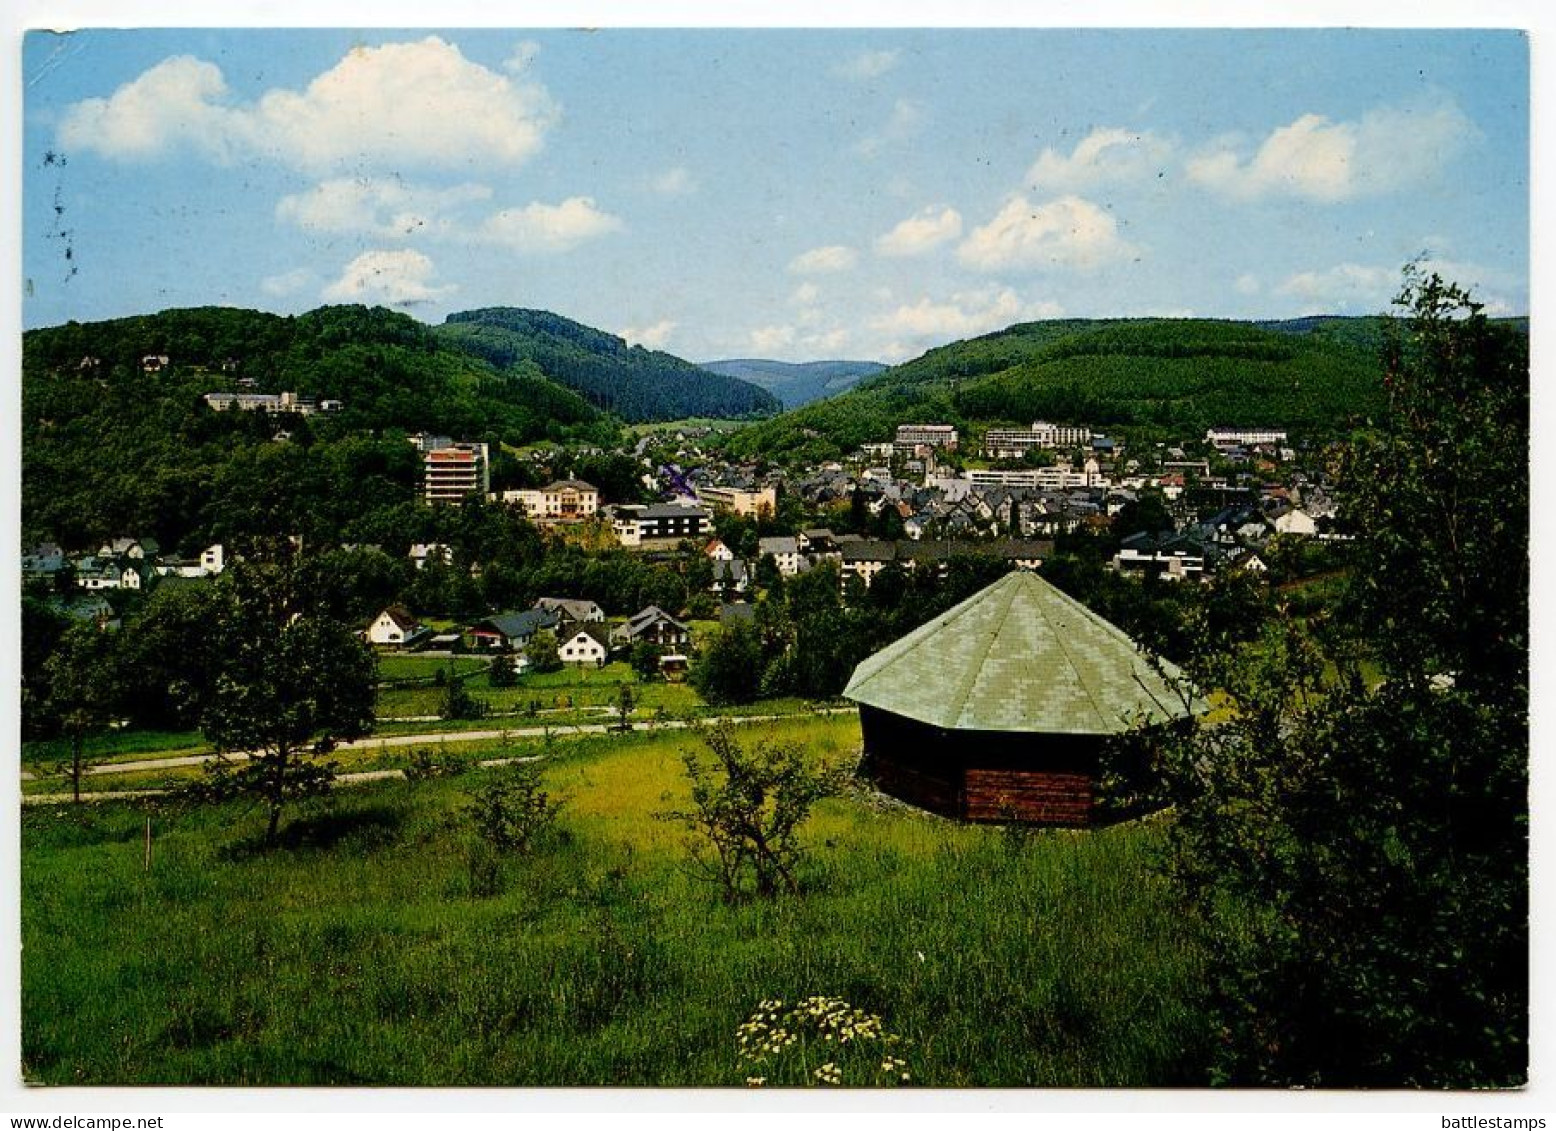 Germany 1994 Postcard Bad Laasphe - Kurlinik Emmaburg, Wittgensteiner Wald- U, Bergland; Pictorial Postmark - Bad Laasphe